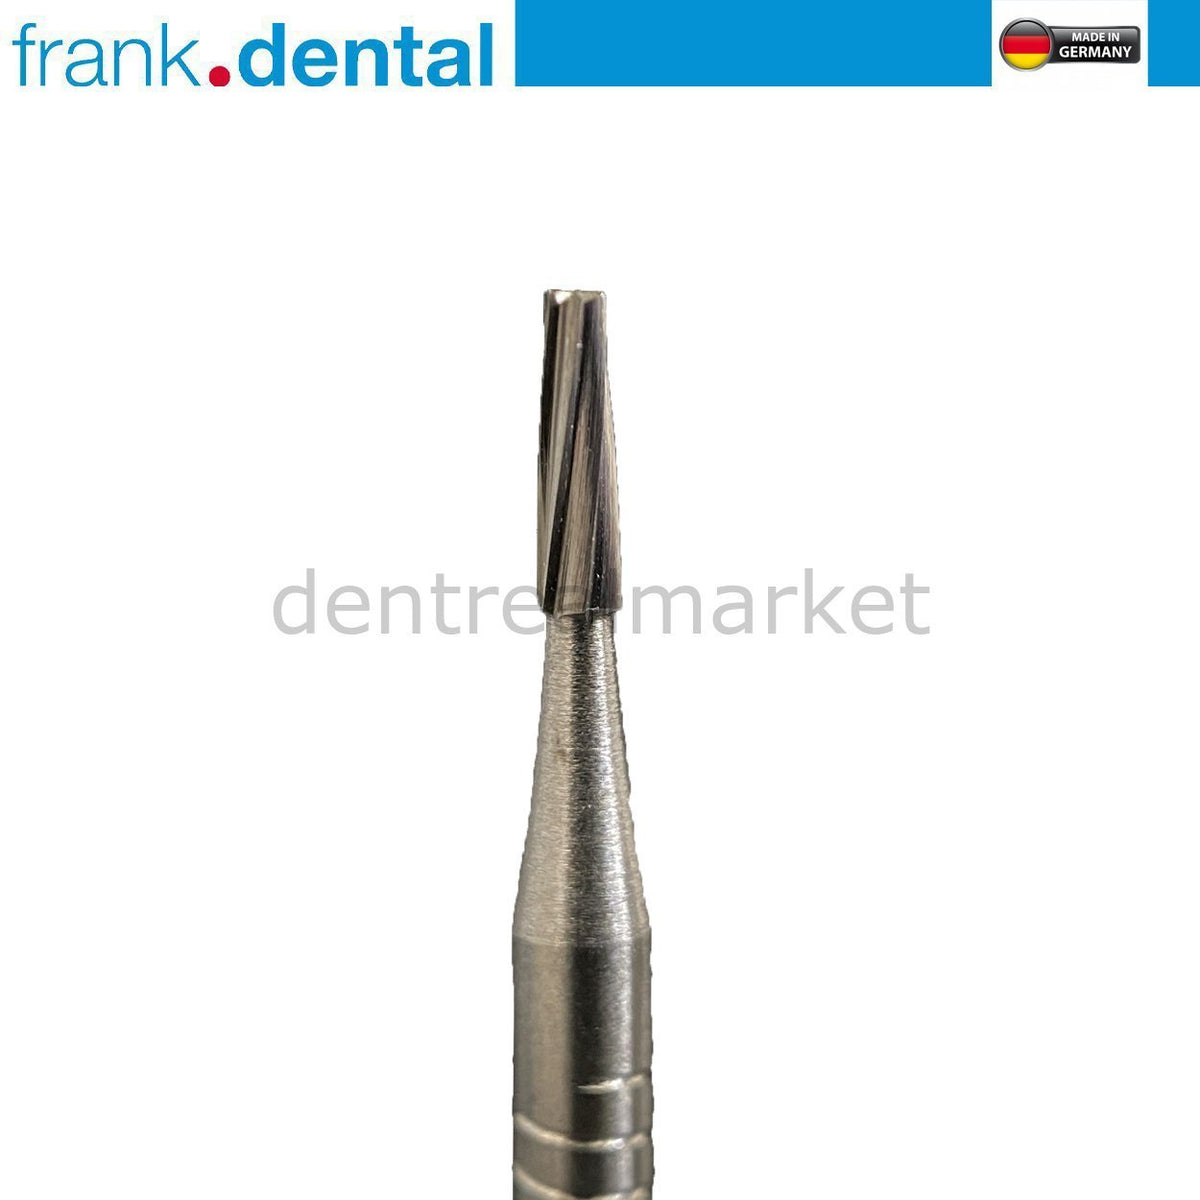 DentrealStore - Frank Dental Tungsten Carbide Burs C.23 - For Handpiece - 5 Pcs